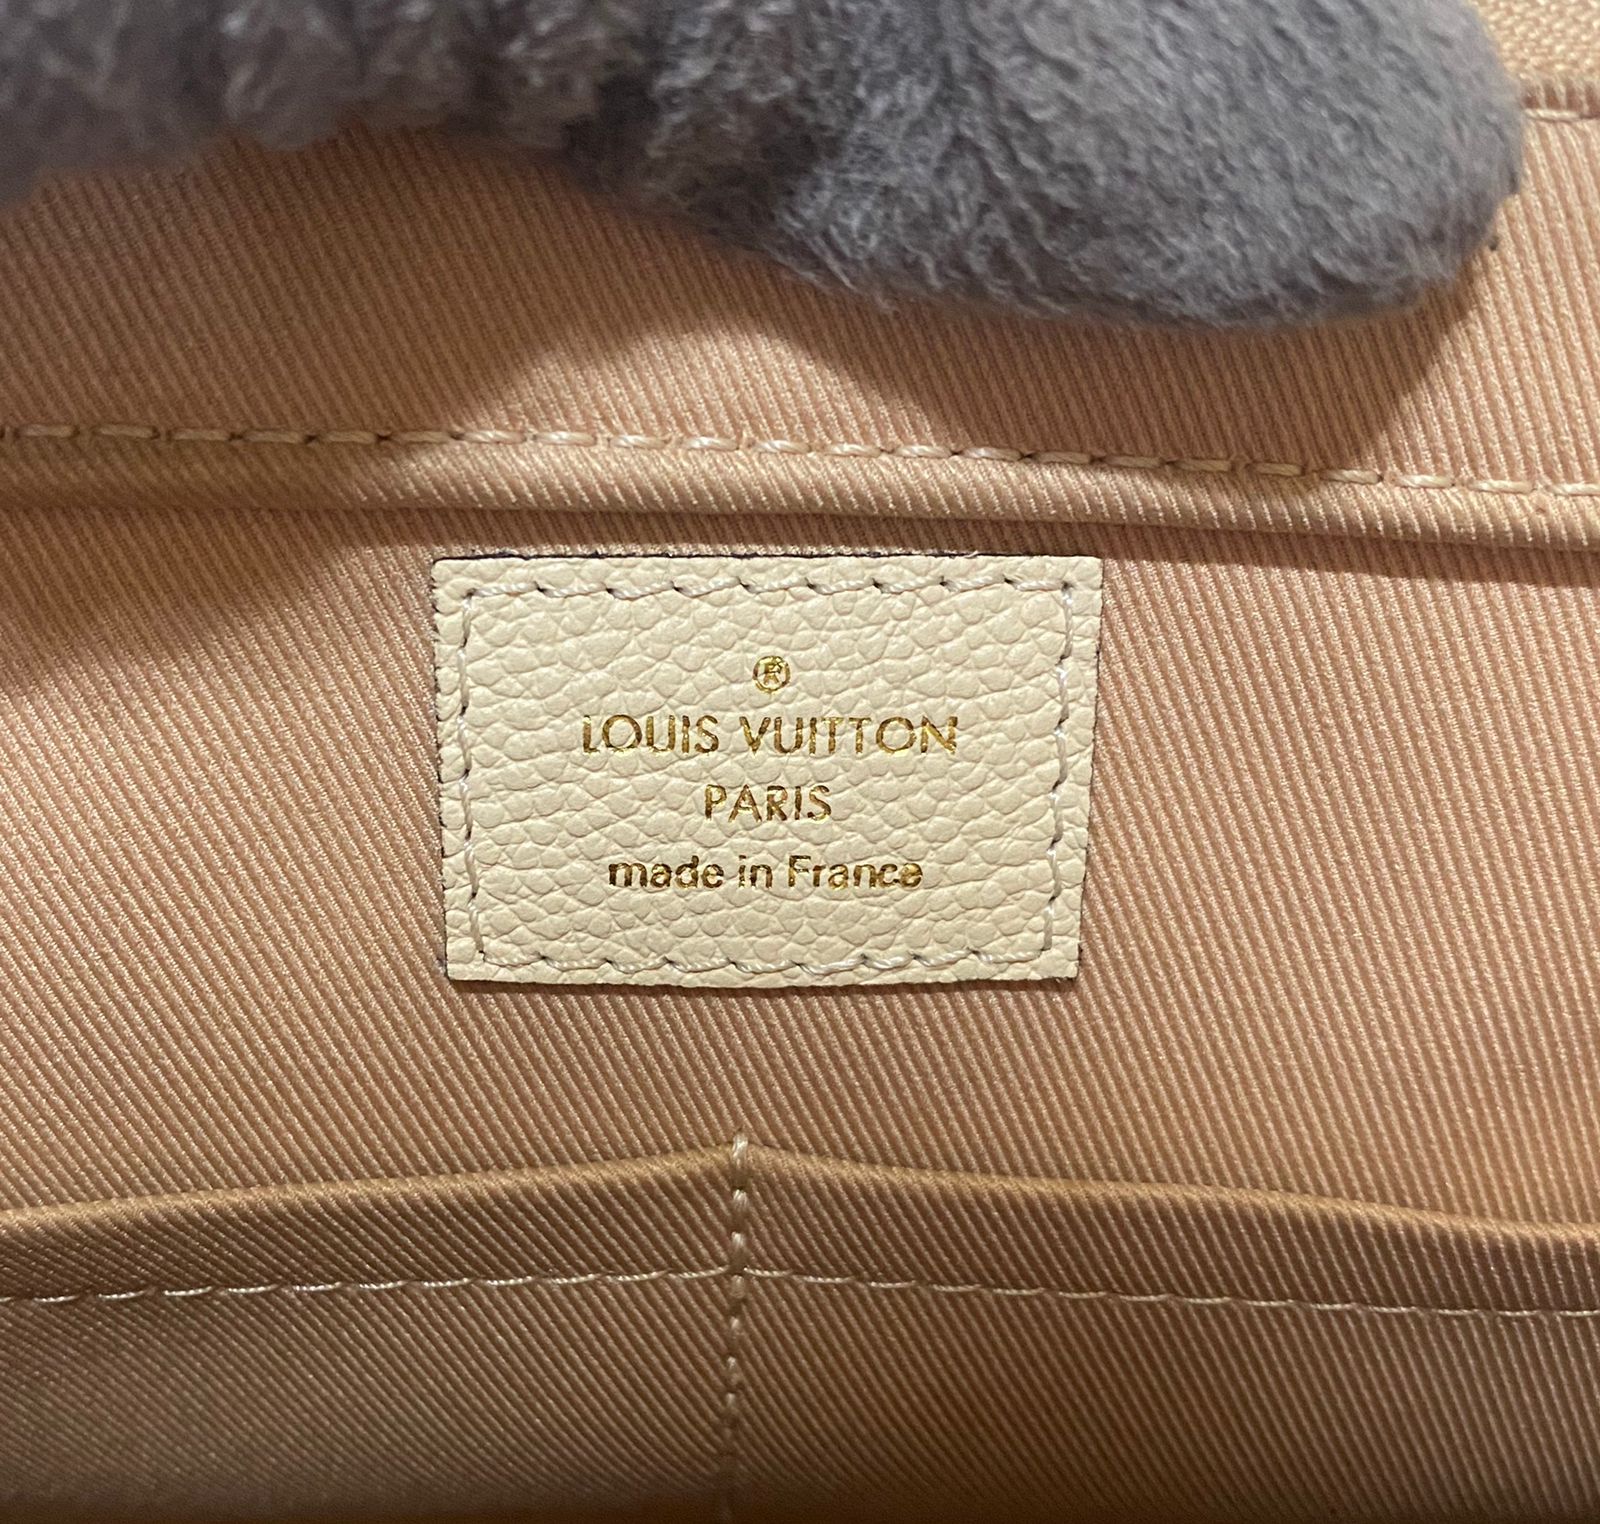 Louis Vuitton Black Monogram Empreinte Leather Sully PM Bag